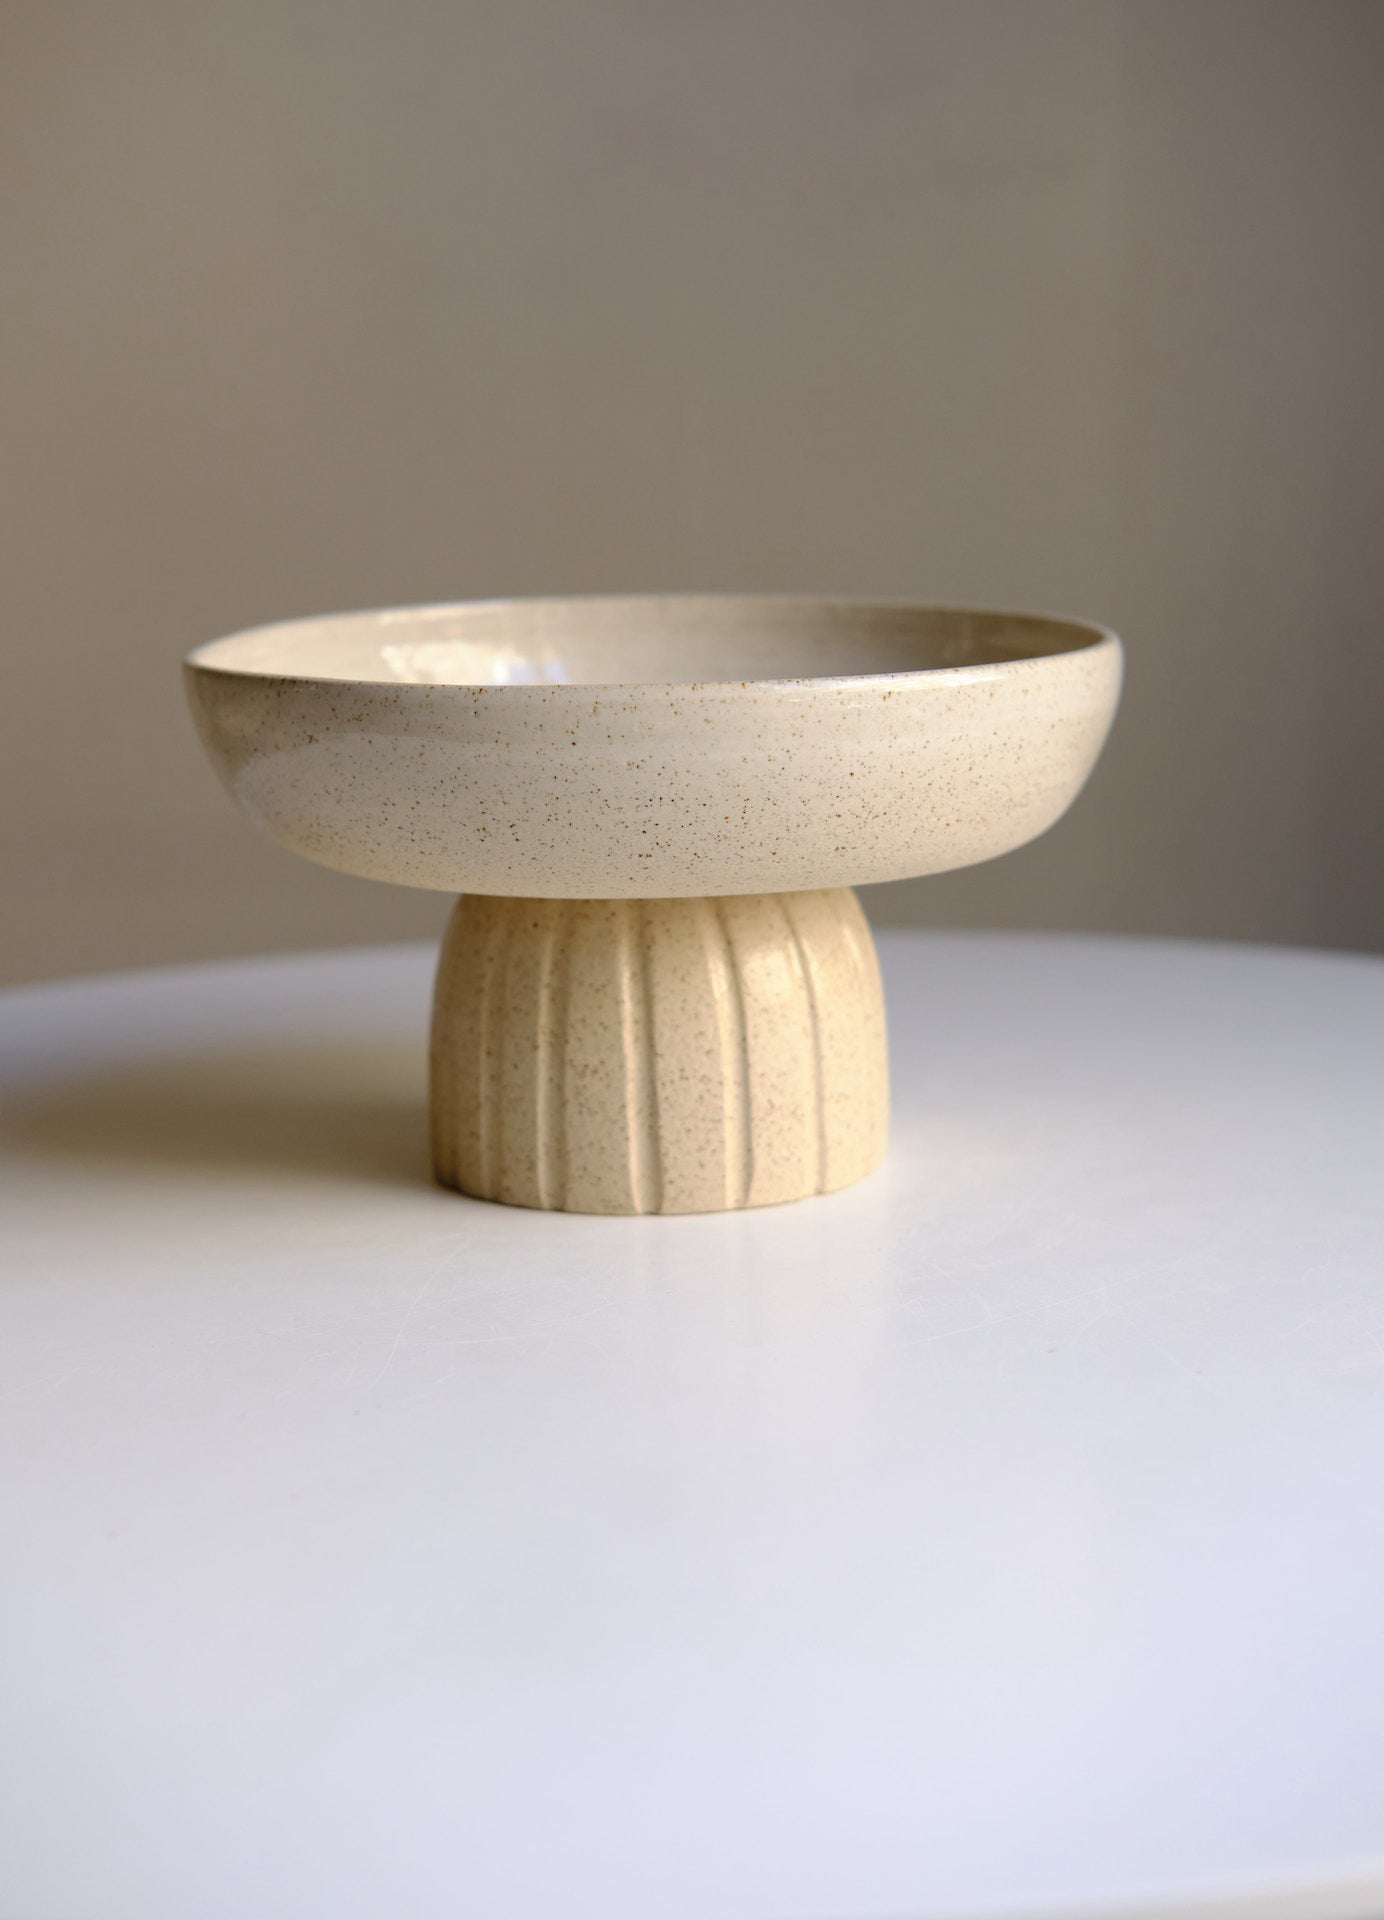 Pedestal bowl no. 3